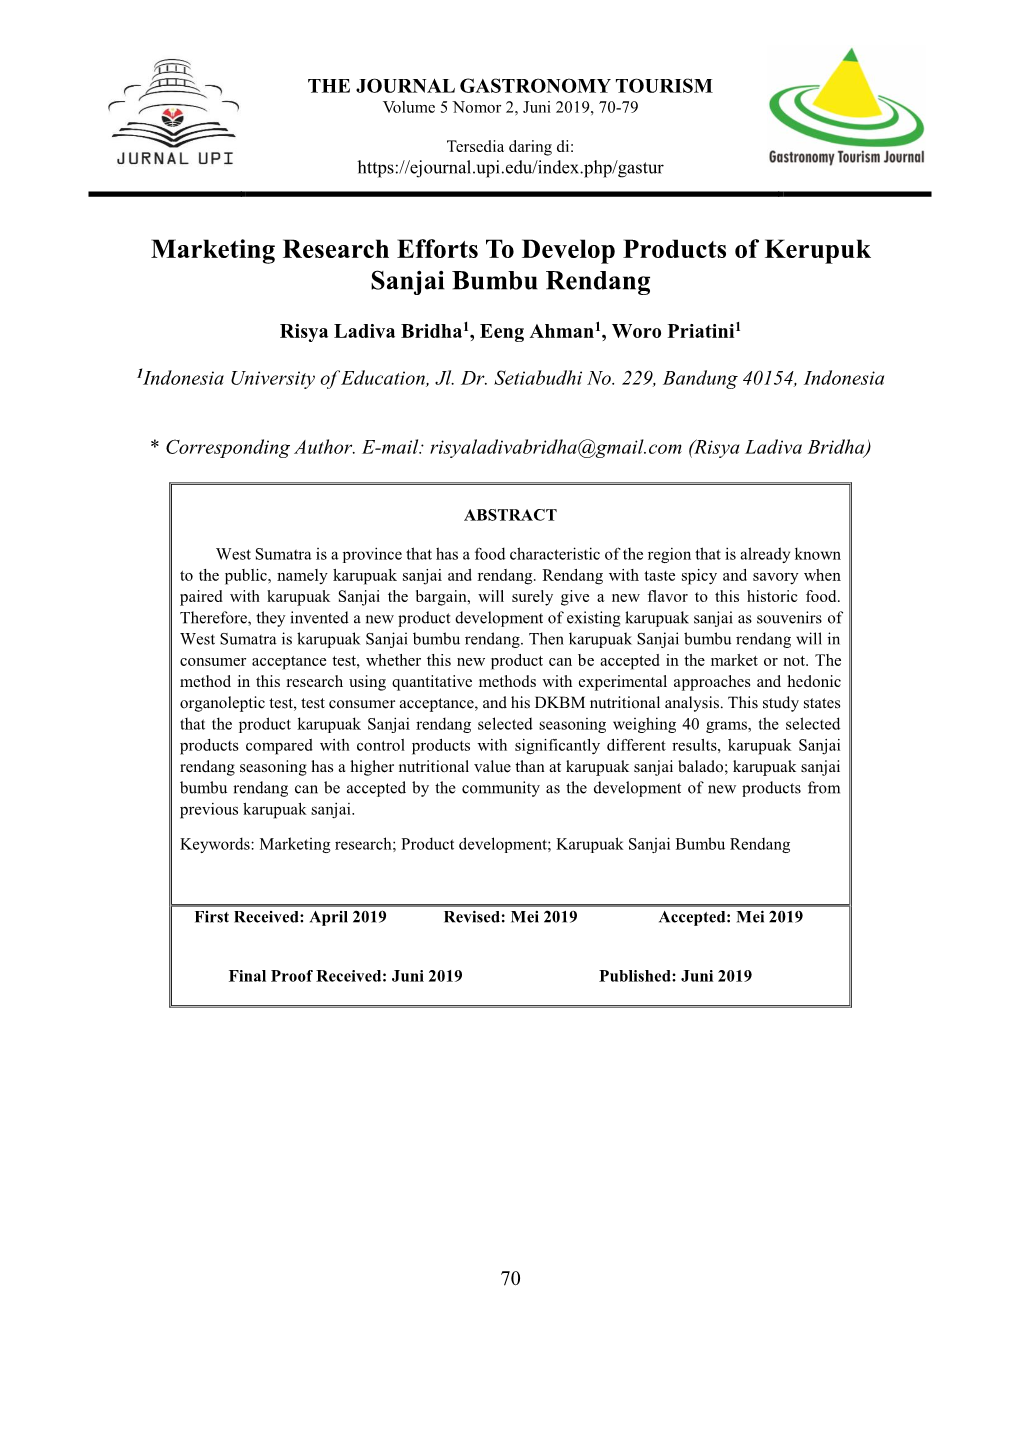 Marketing Research Efforts to Develop Products of Kerupuk Sanjai Bumbu Rendang